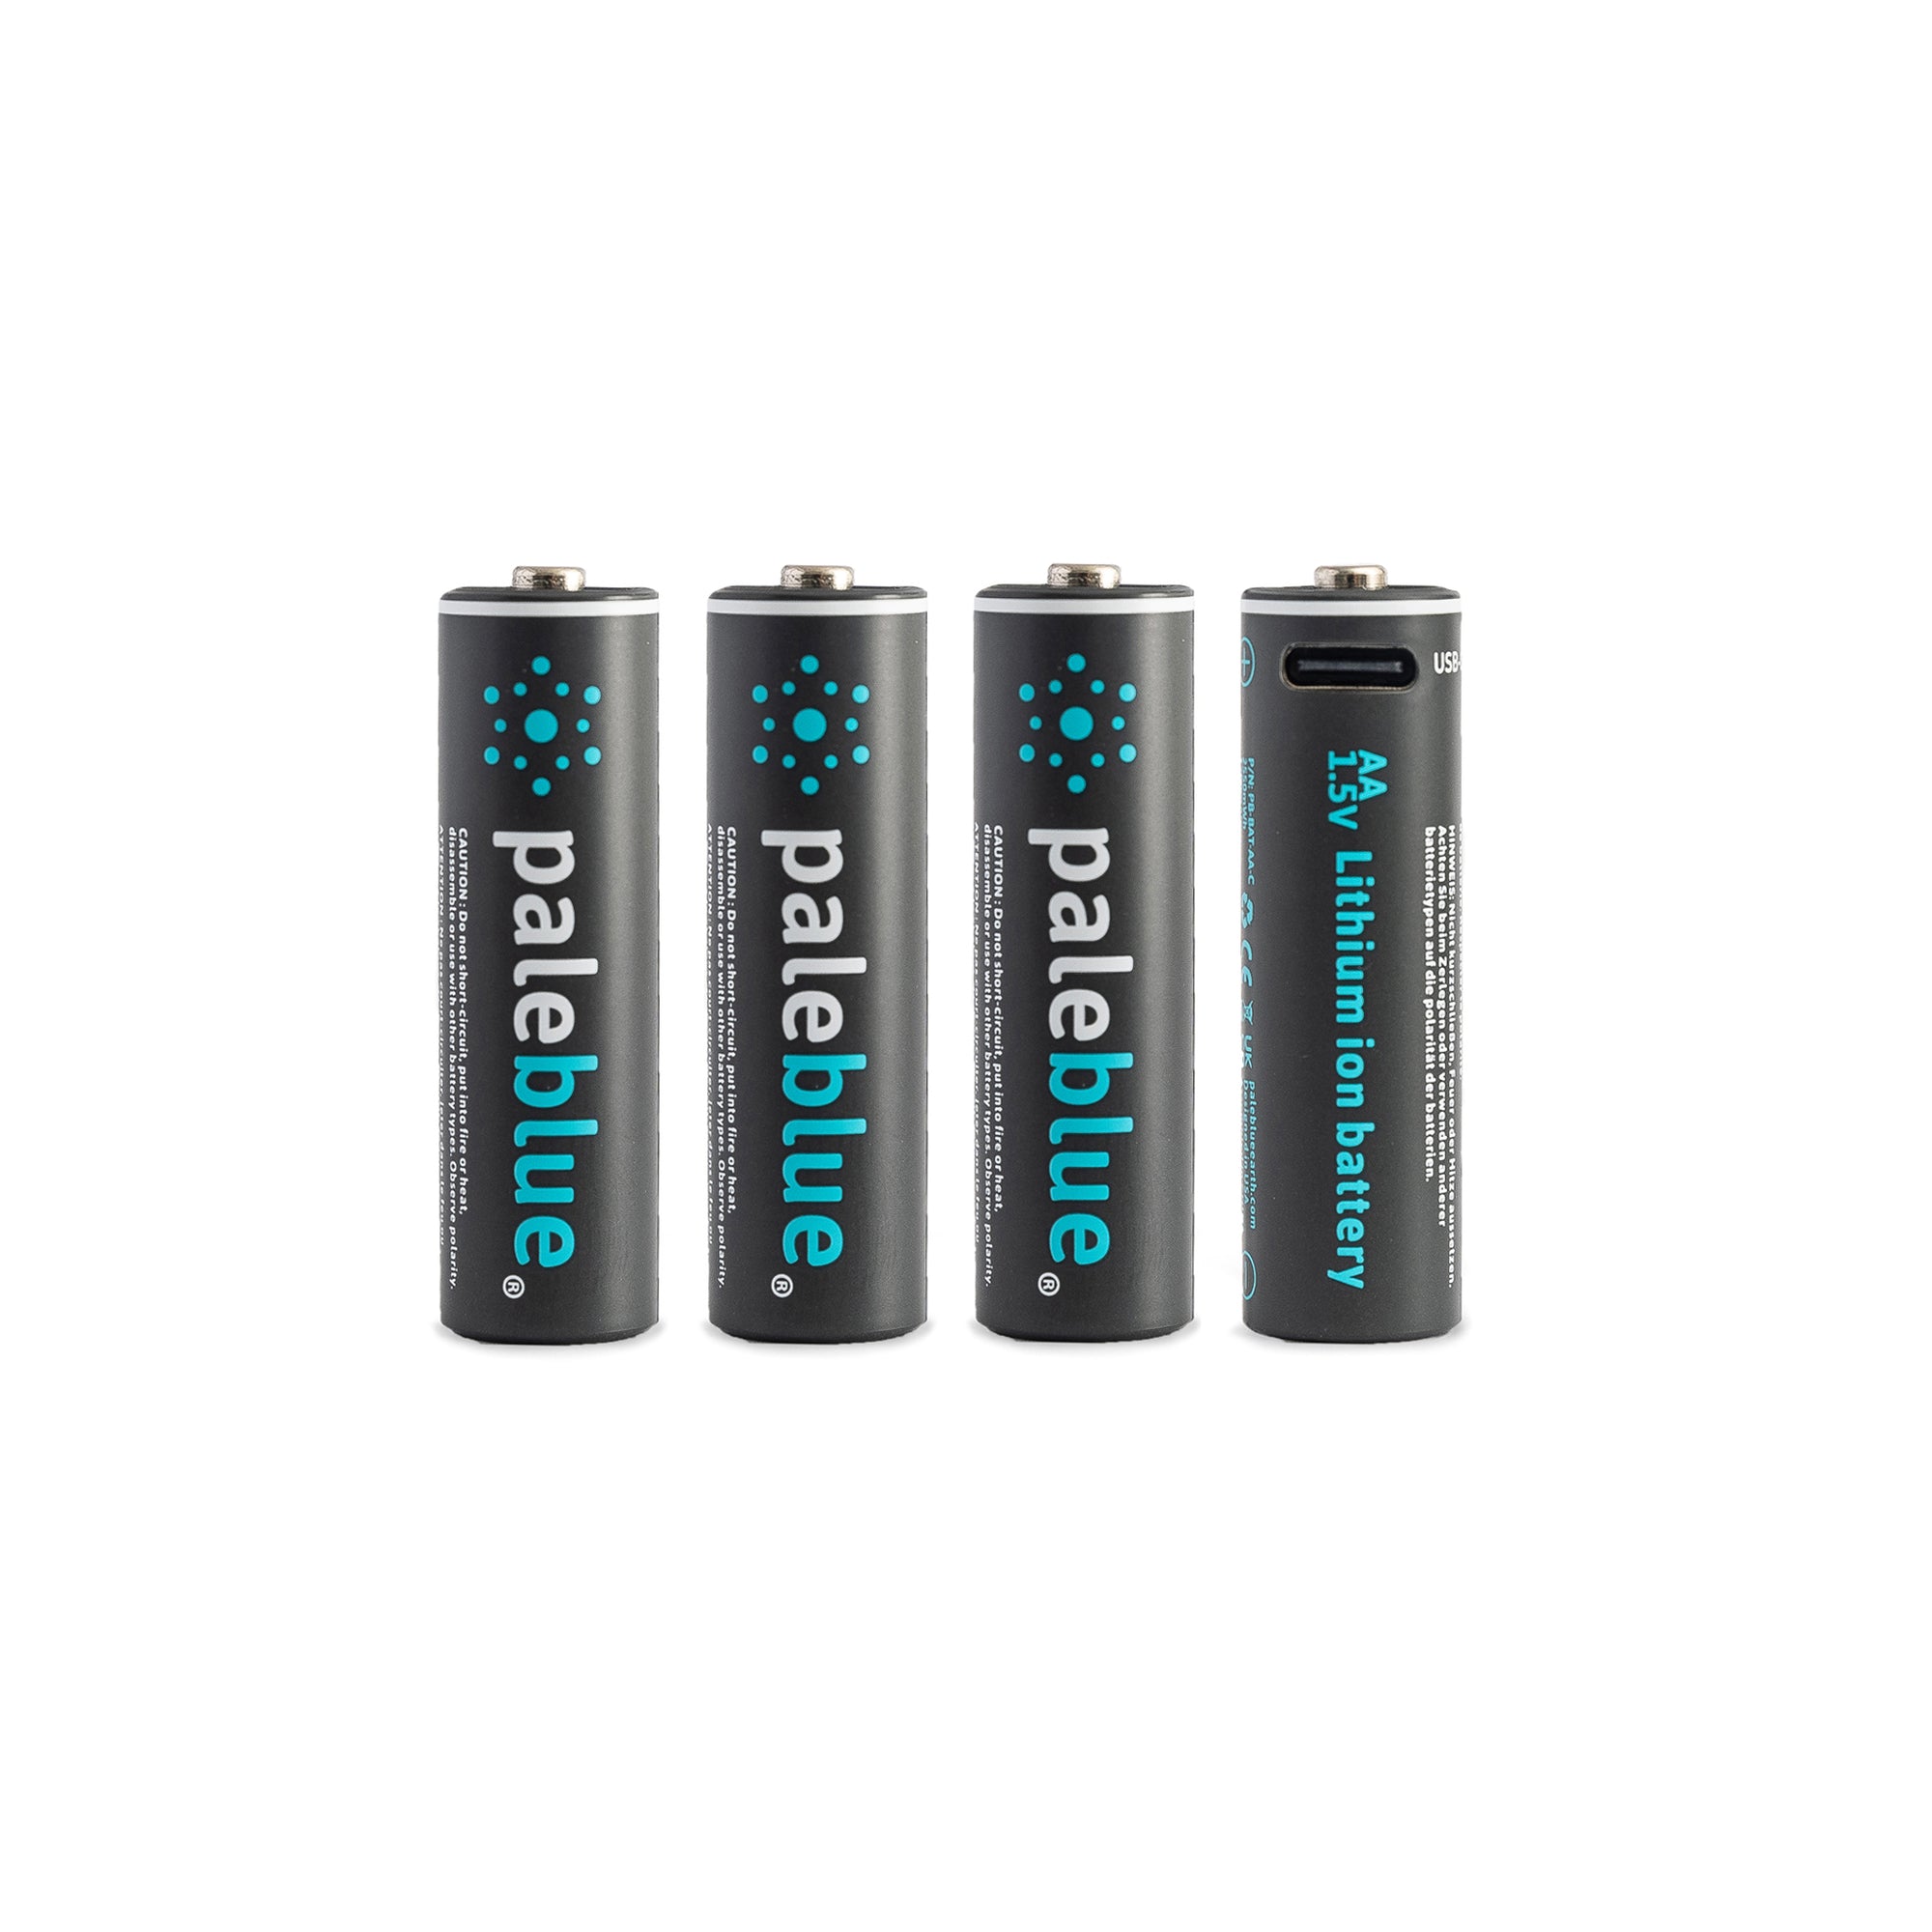 Pile rechargeable AA / LR6 / LR06 rechargeable Type C - Pale Blue